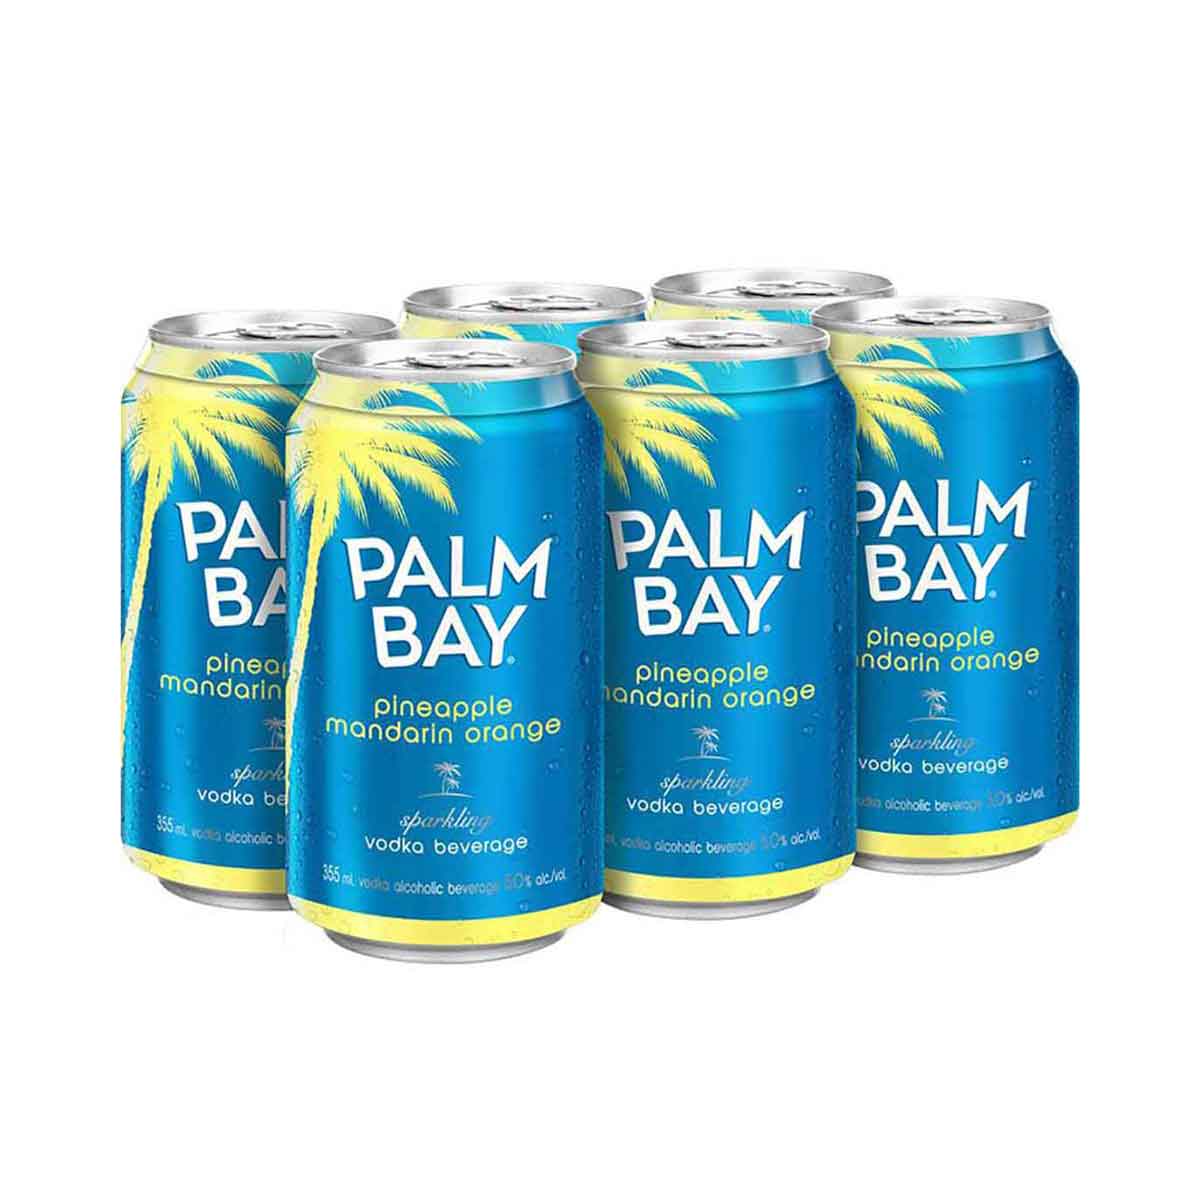 TAG Liquor Stores BC-PALM BAY PINEAPPLE MANDARIN 6 CANS